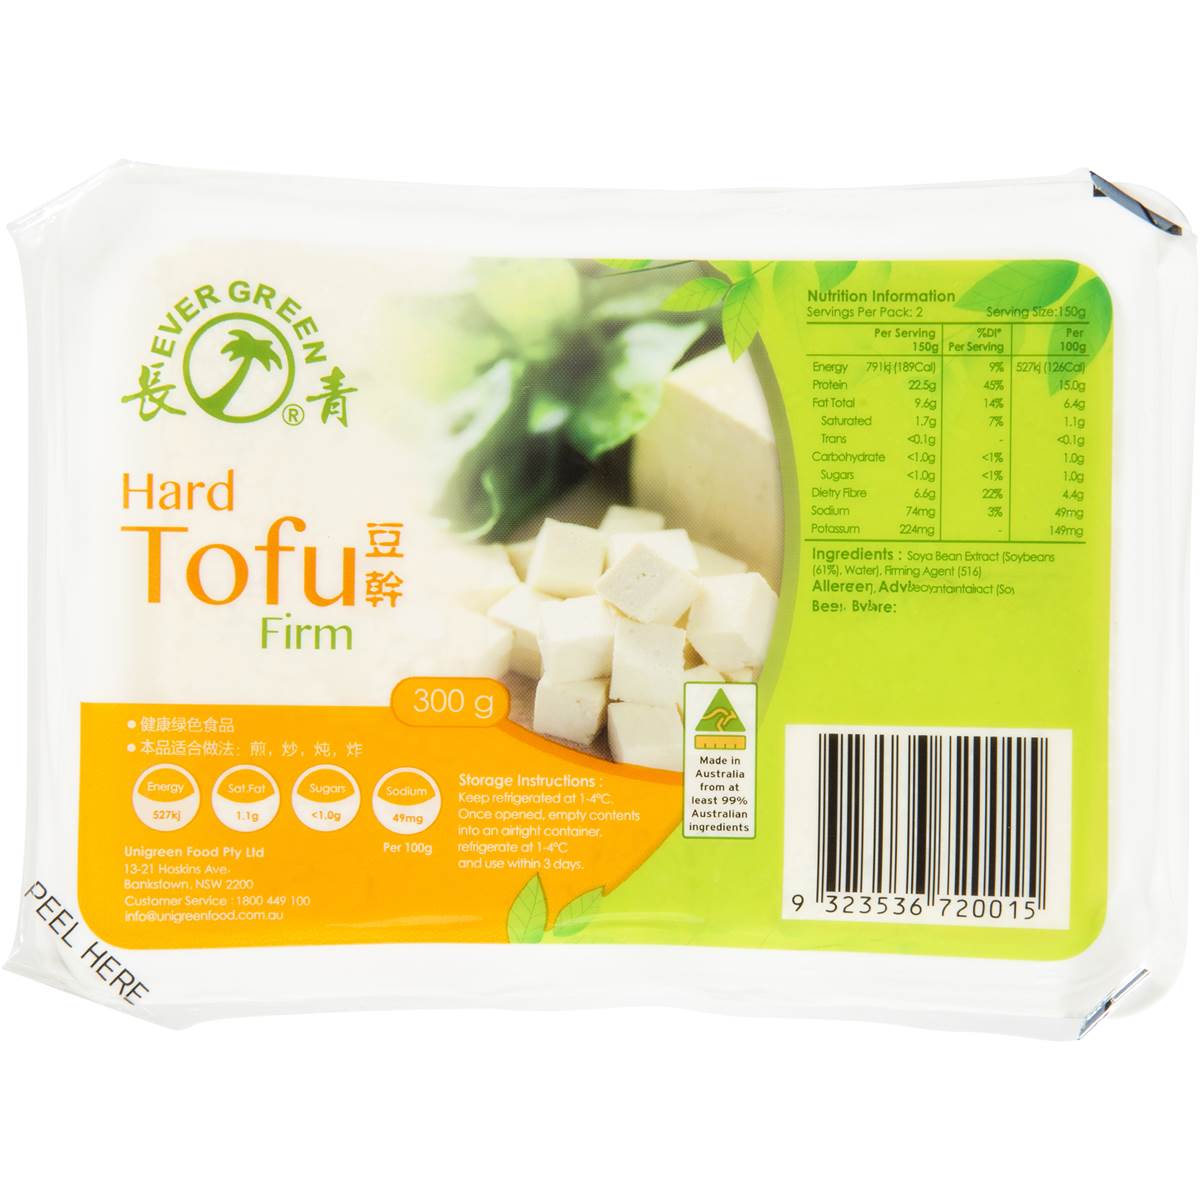 Calories in Evergreen Hard Tofu